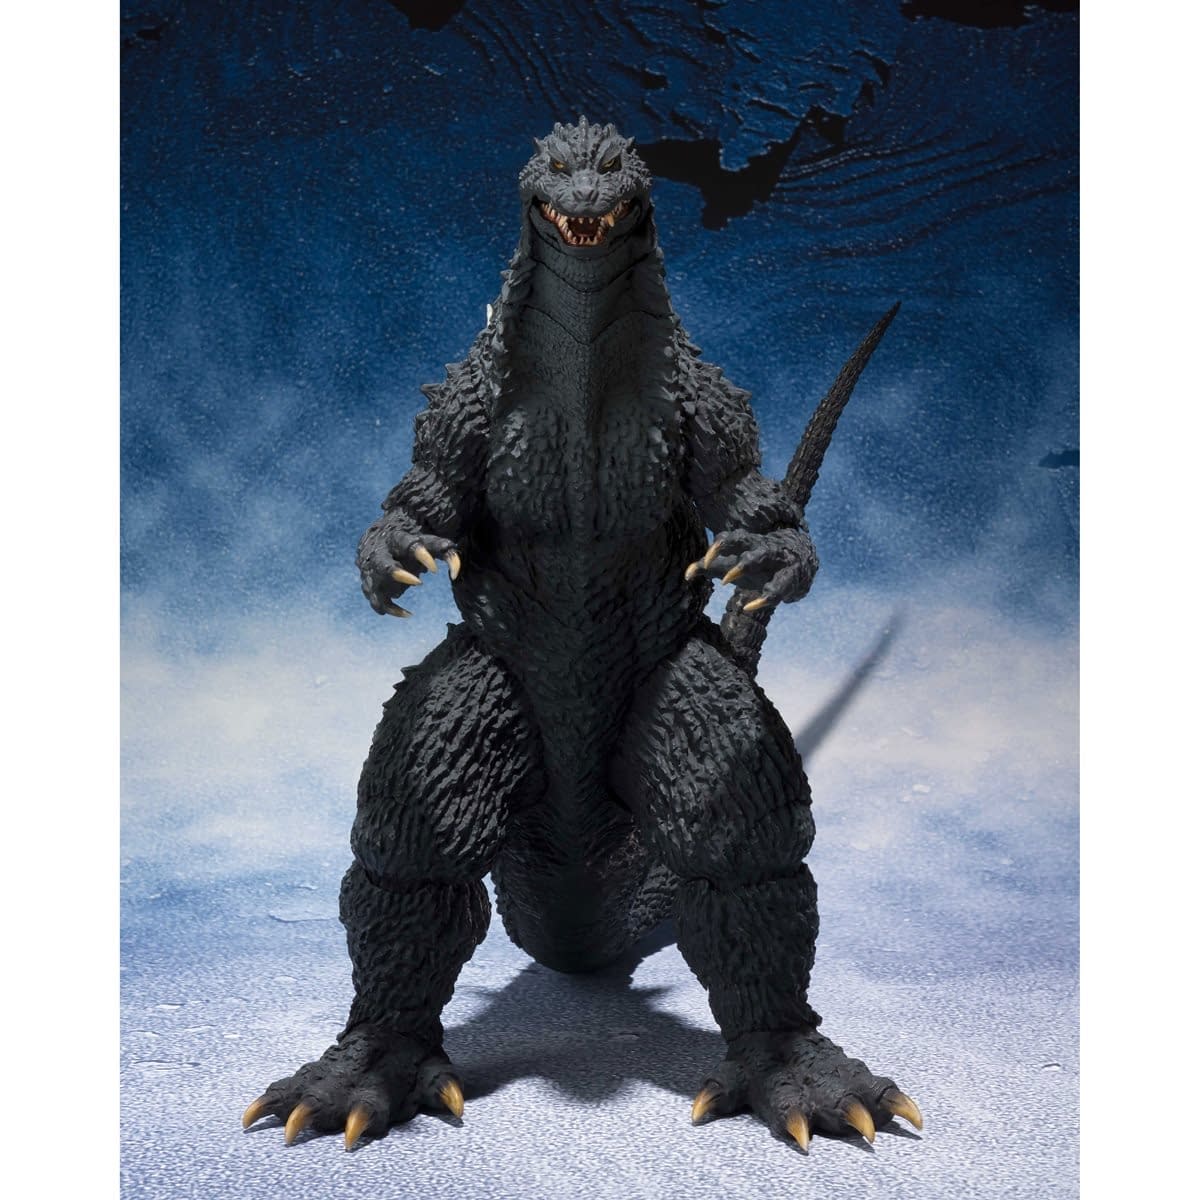 Godzilla Returns with ReReleased SH MonsterArts Figures